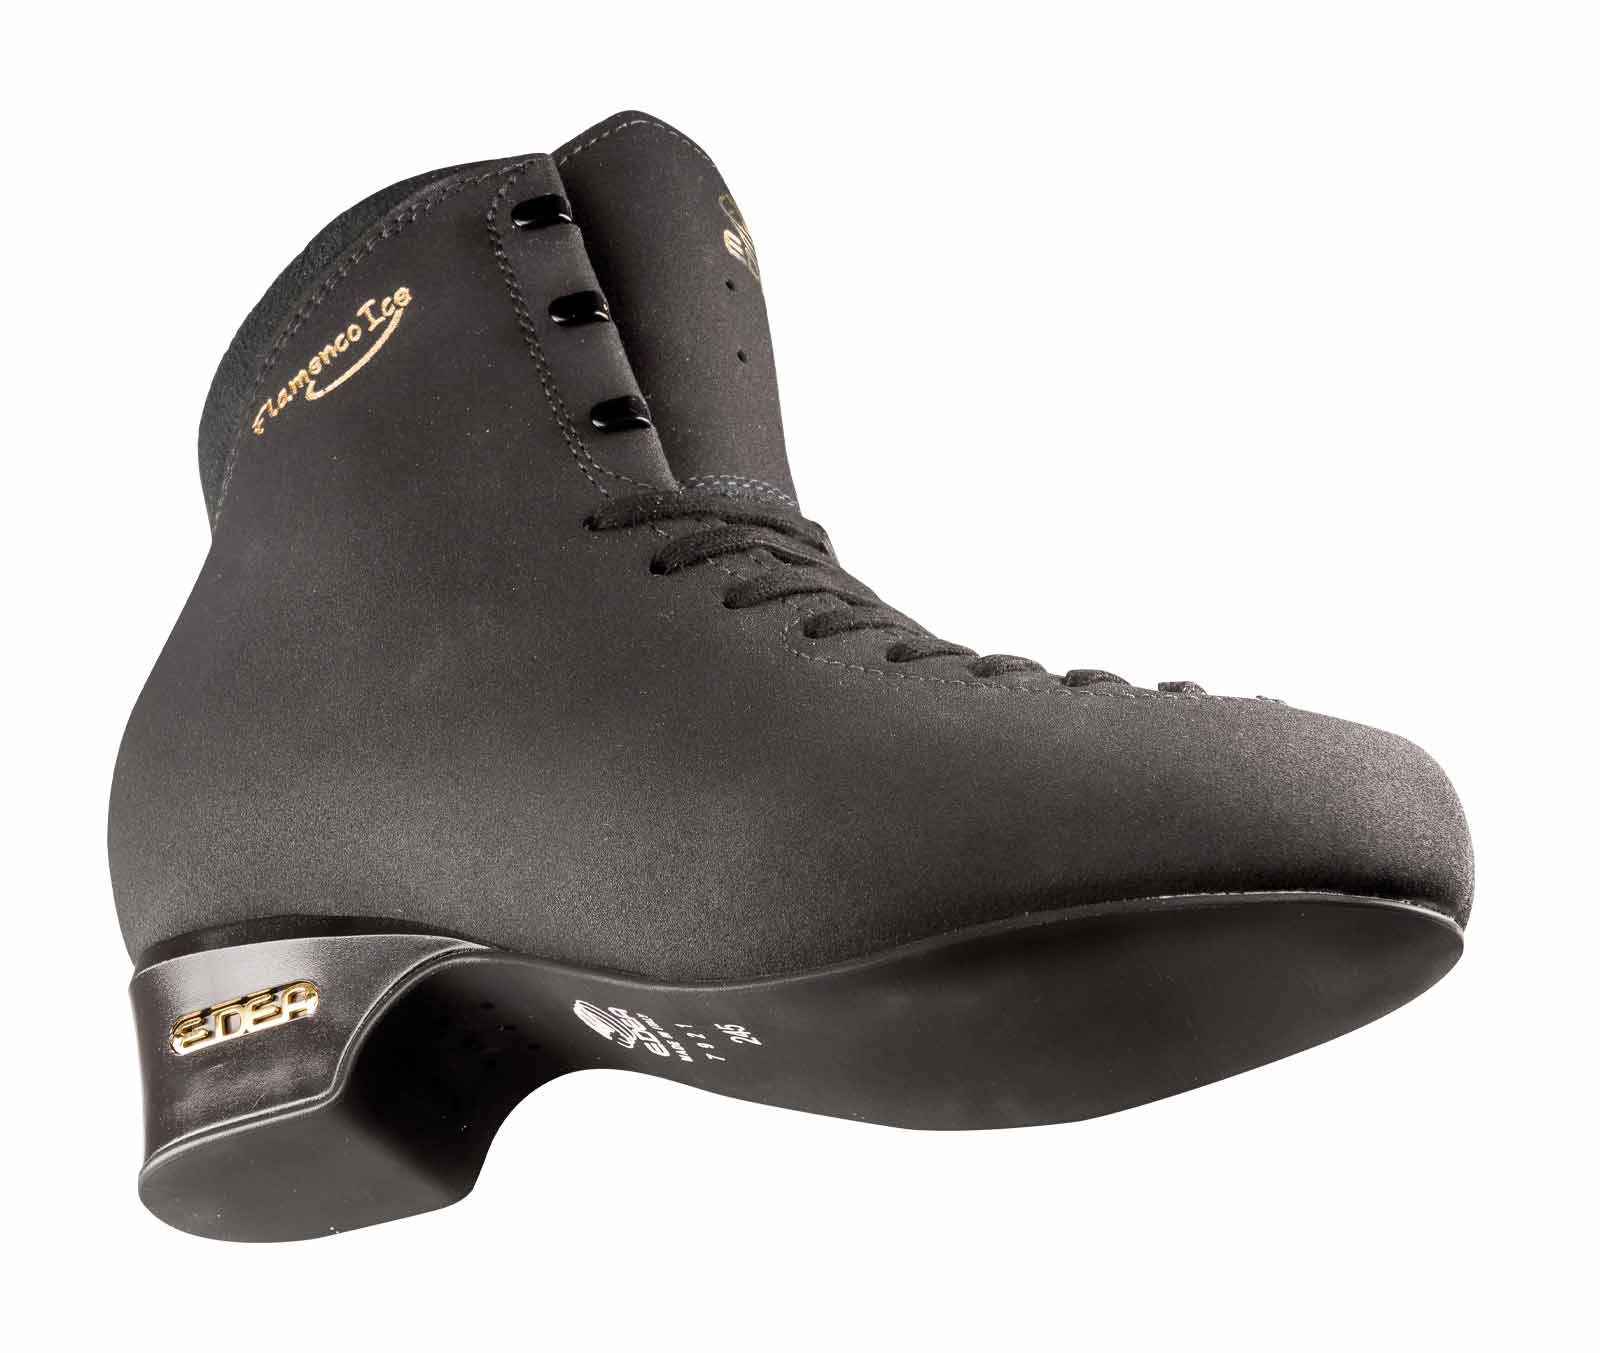 Edea Flamenco Ice Boot Only in Black. Senior Sizes 260 - 310